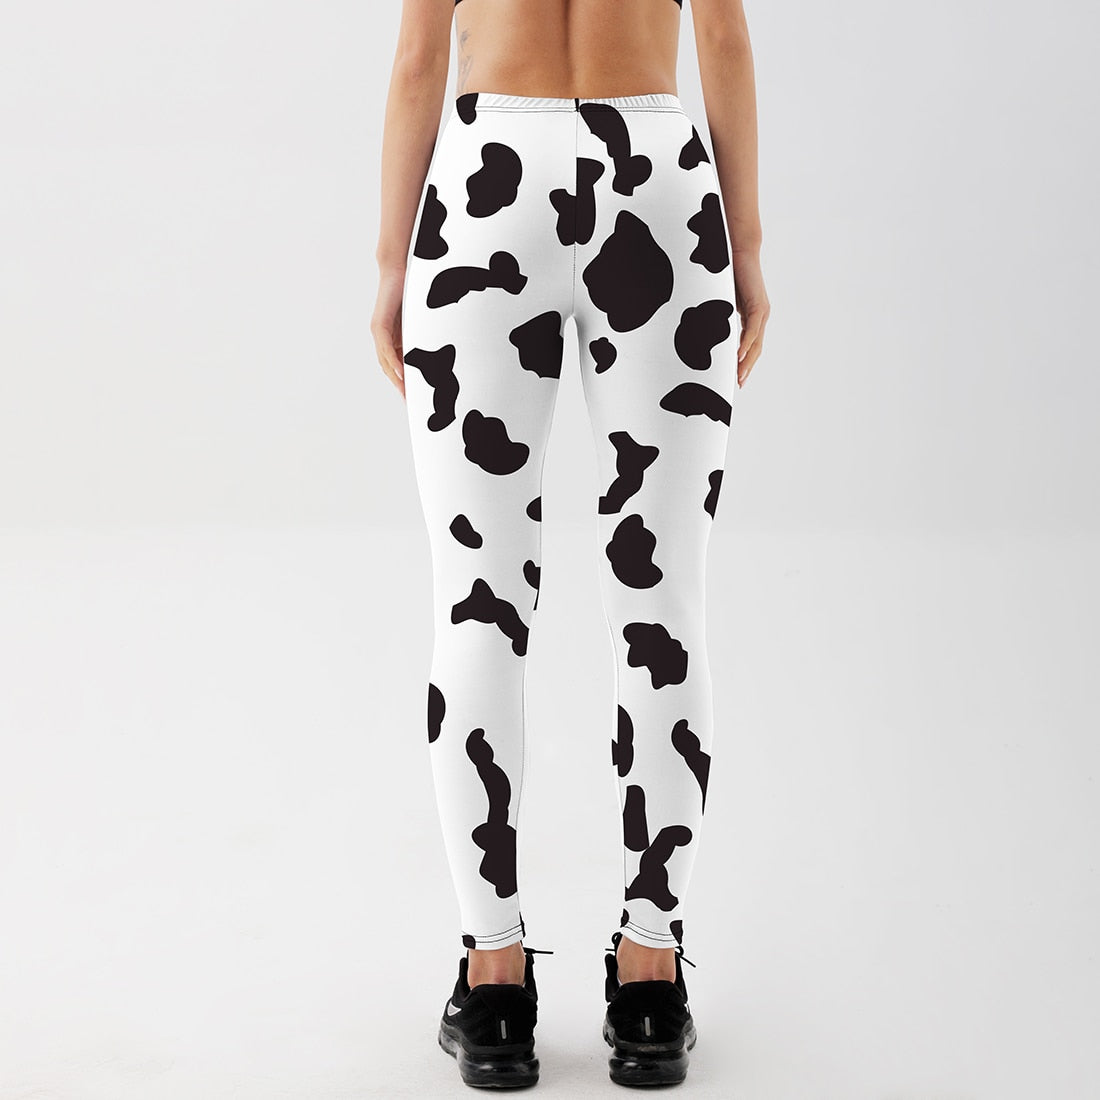  Bagea-Ka Cowhide Milk Cow Print High Waisted Leggings